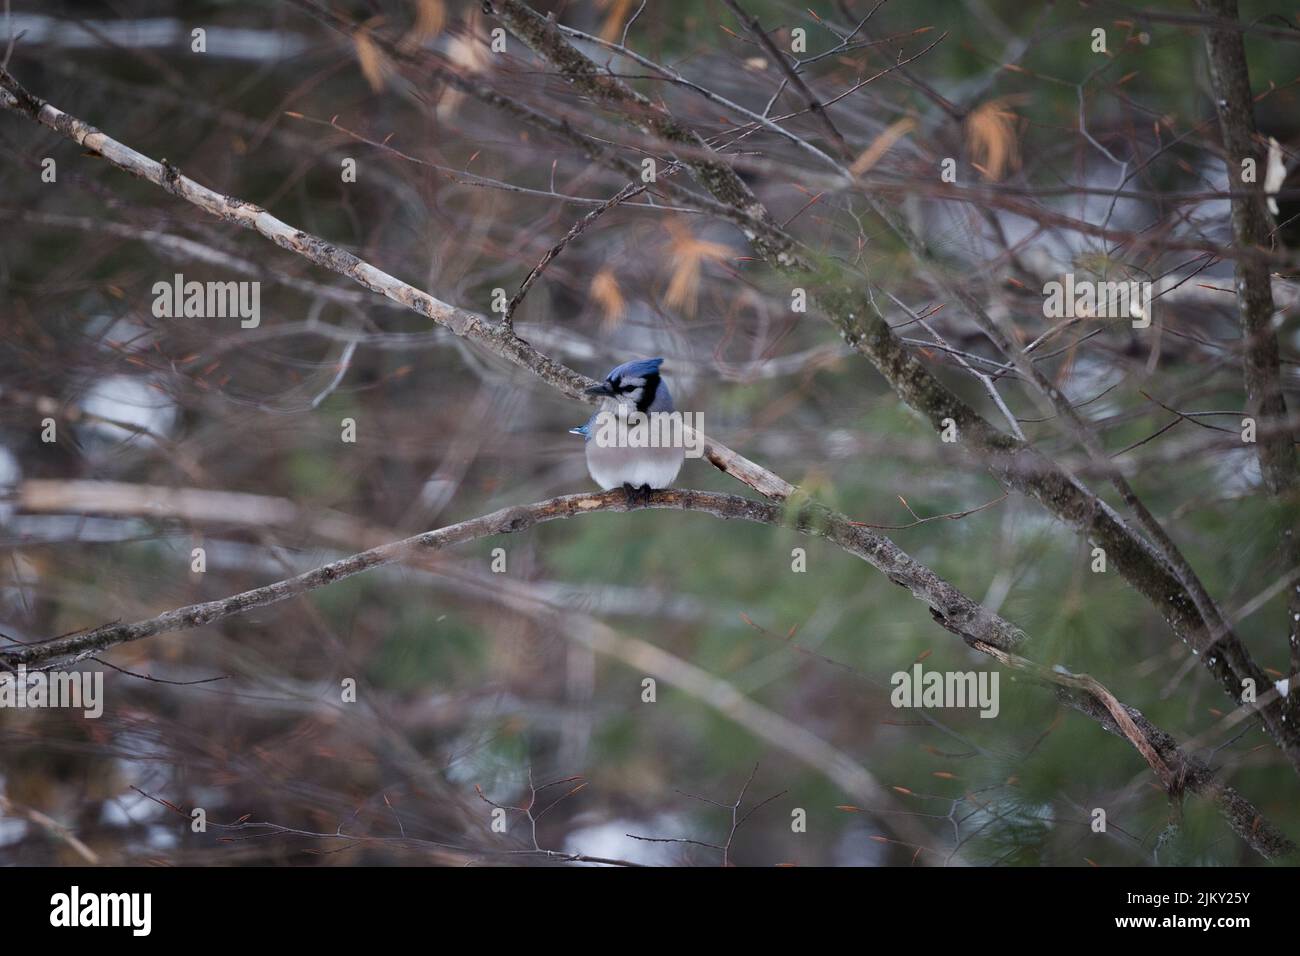 A tiny blue Jay bird sitting on tree branch Stock Photo